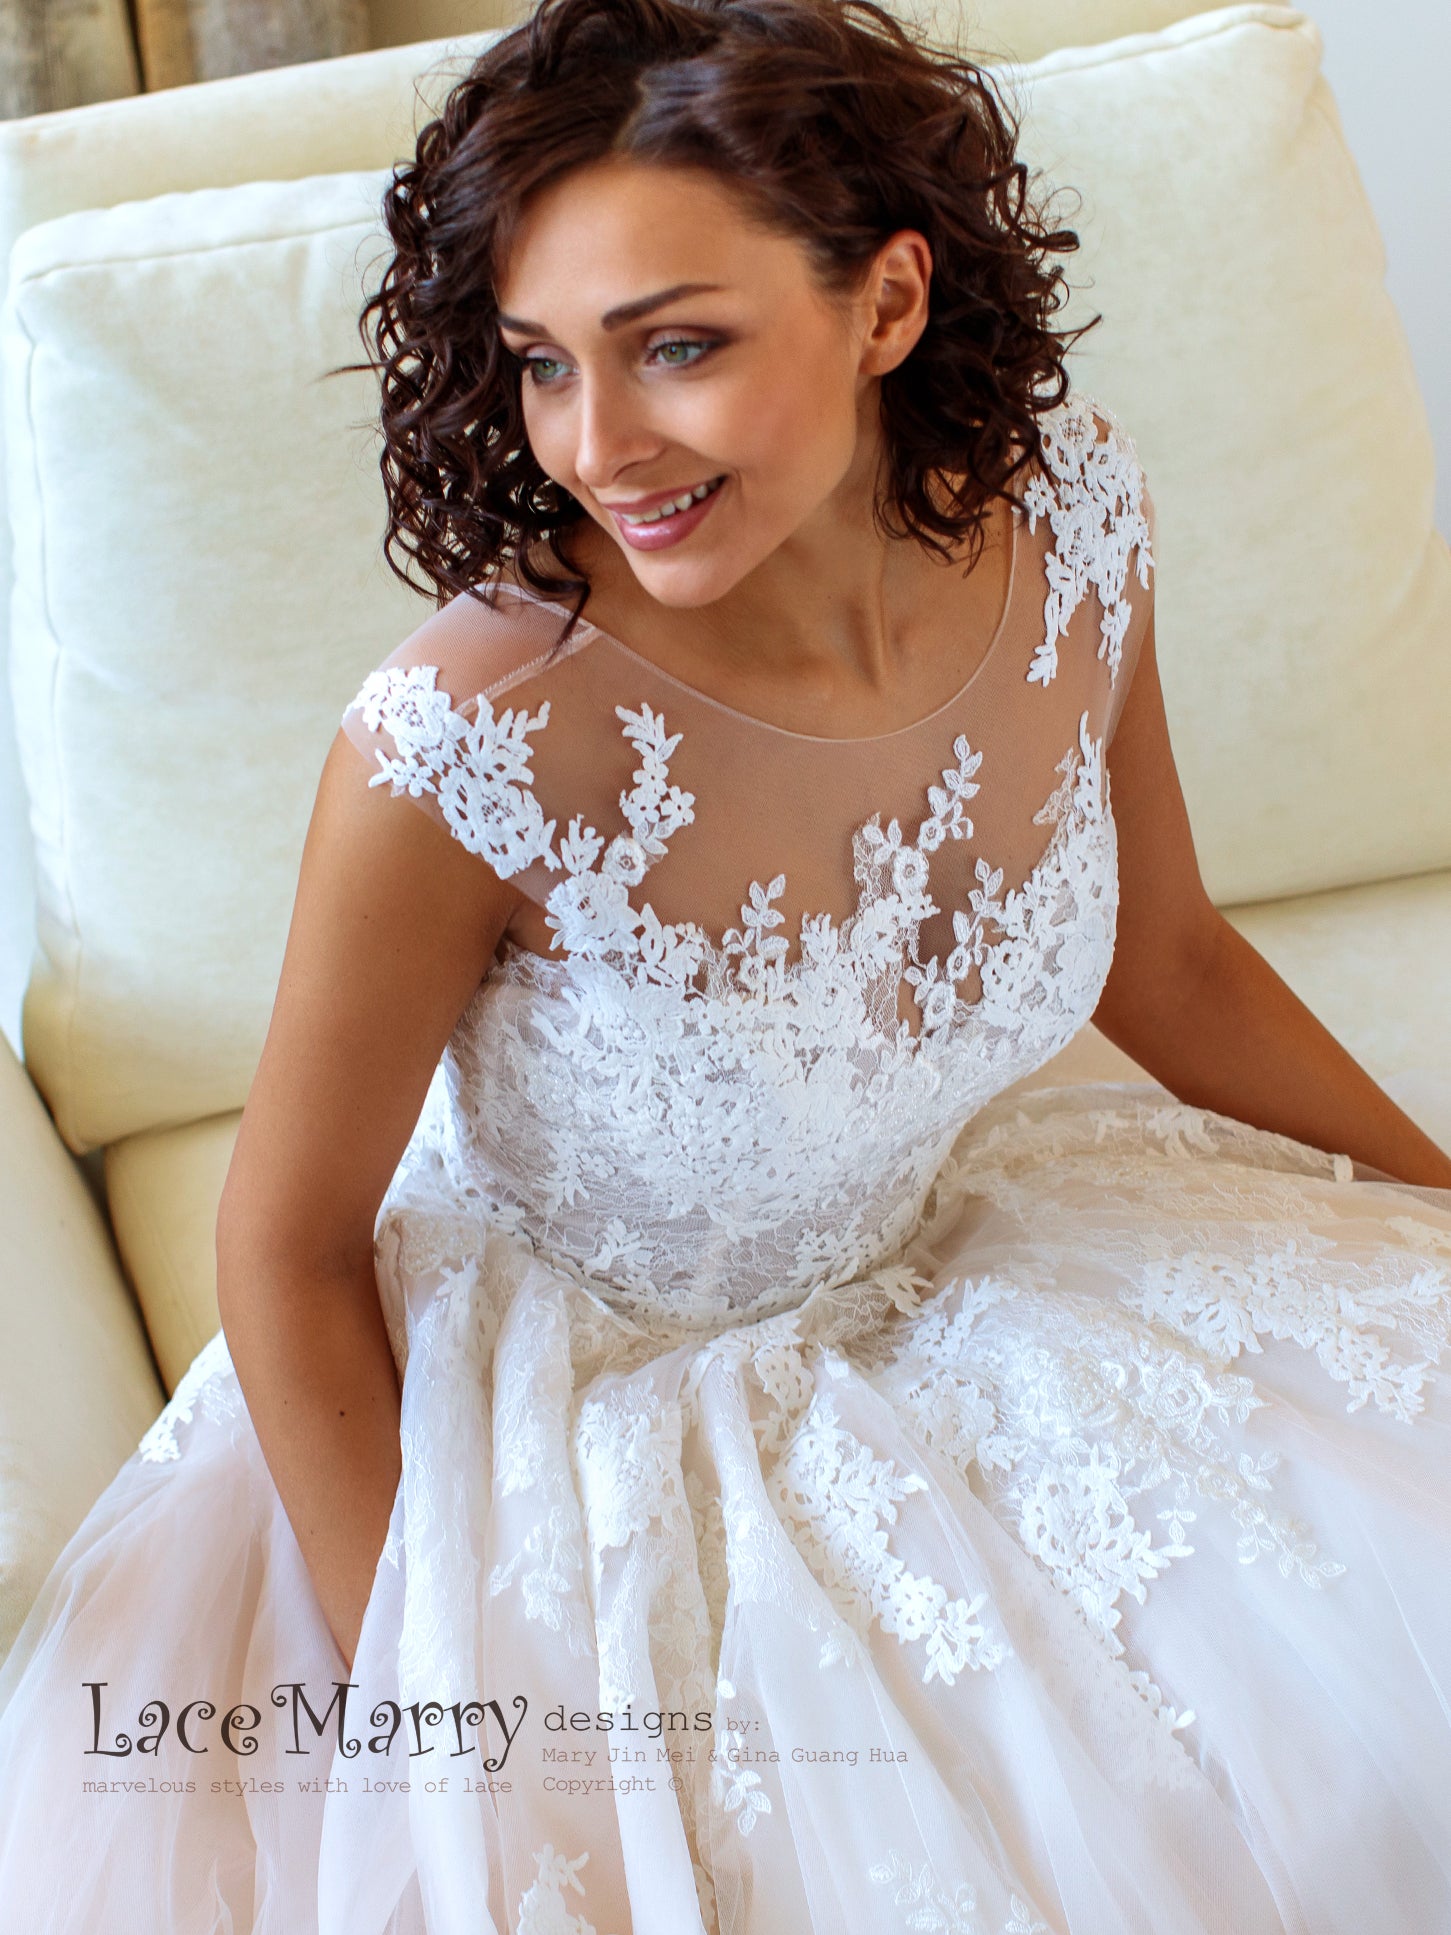 Princess Lace Wedding Dress with Ivory Floral Appliqués - LaceMarry